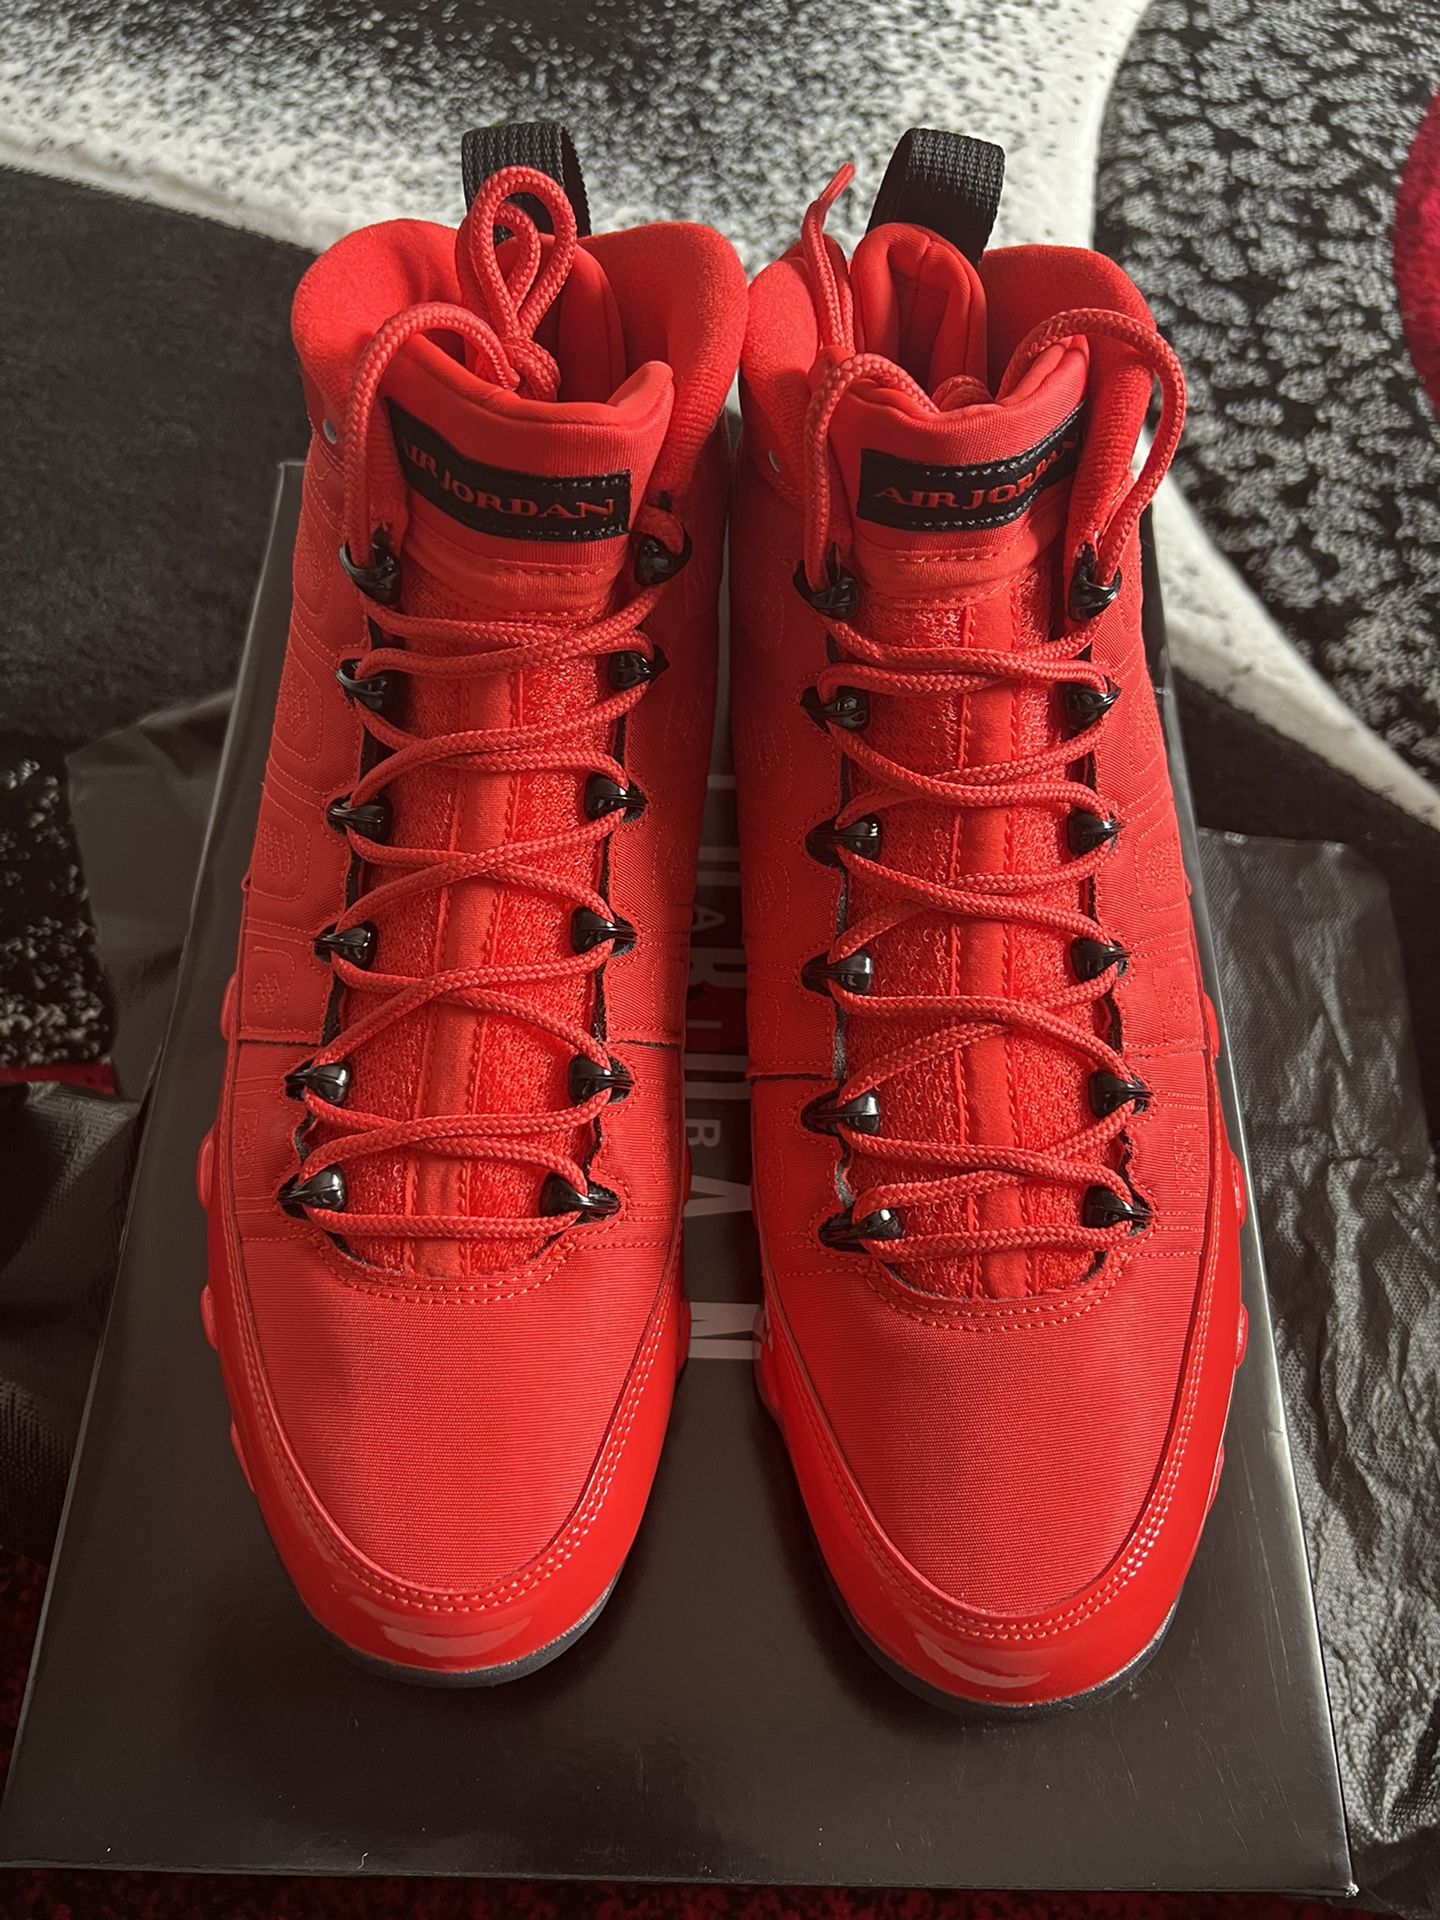 Brand New Jordan 9 chile red sz.11 w/receipt No Trade 